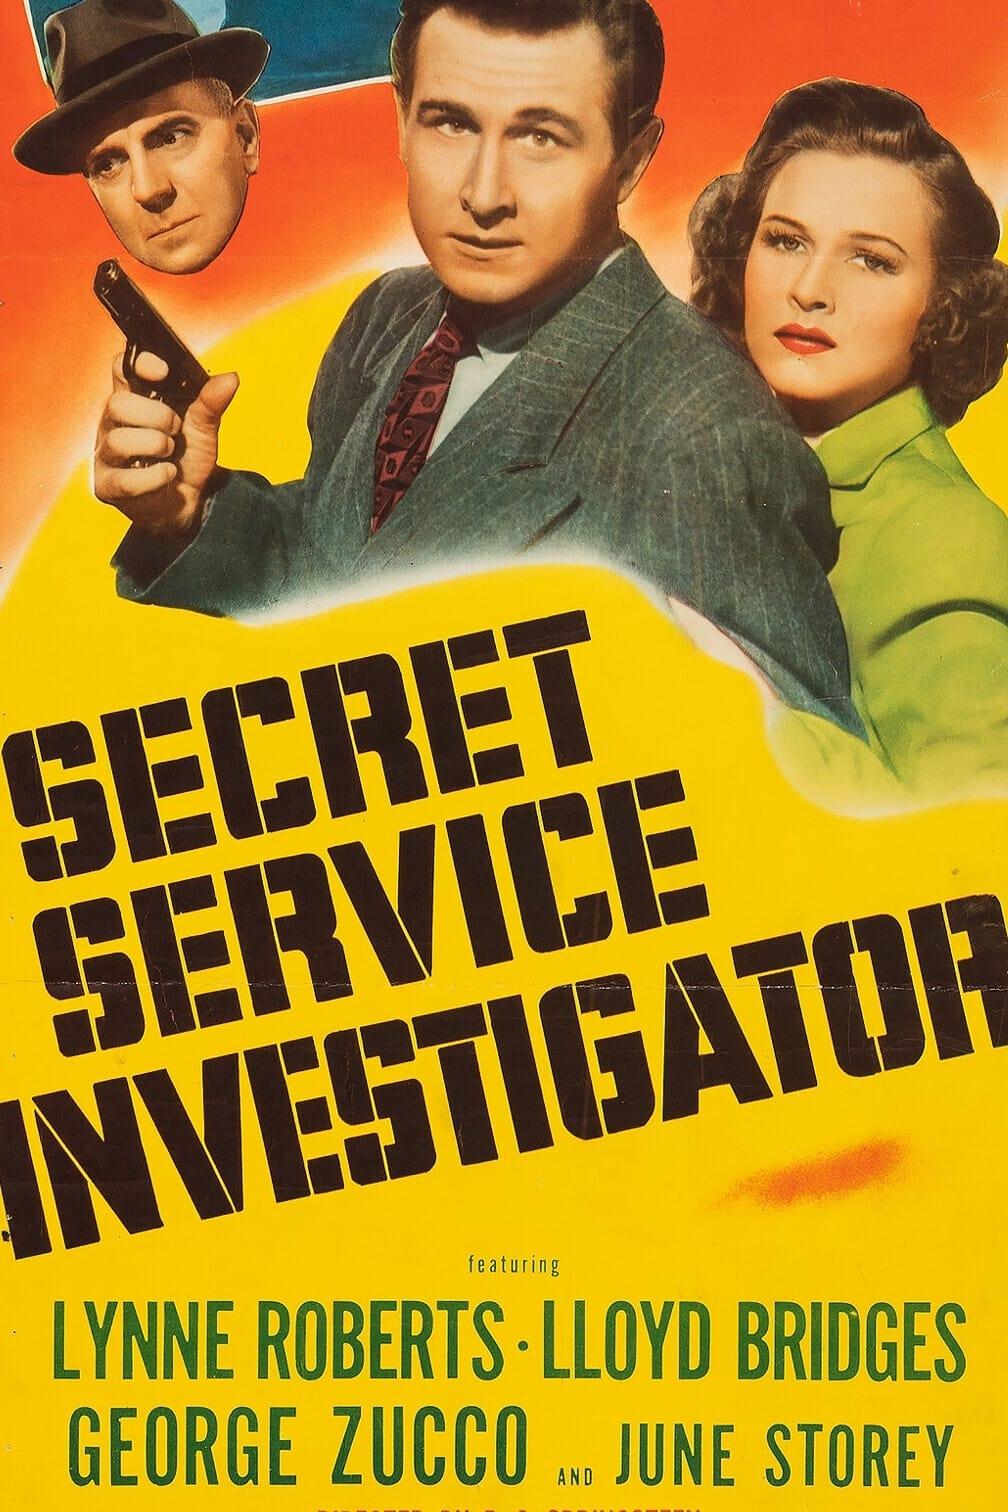 Secret Service Investigator poster